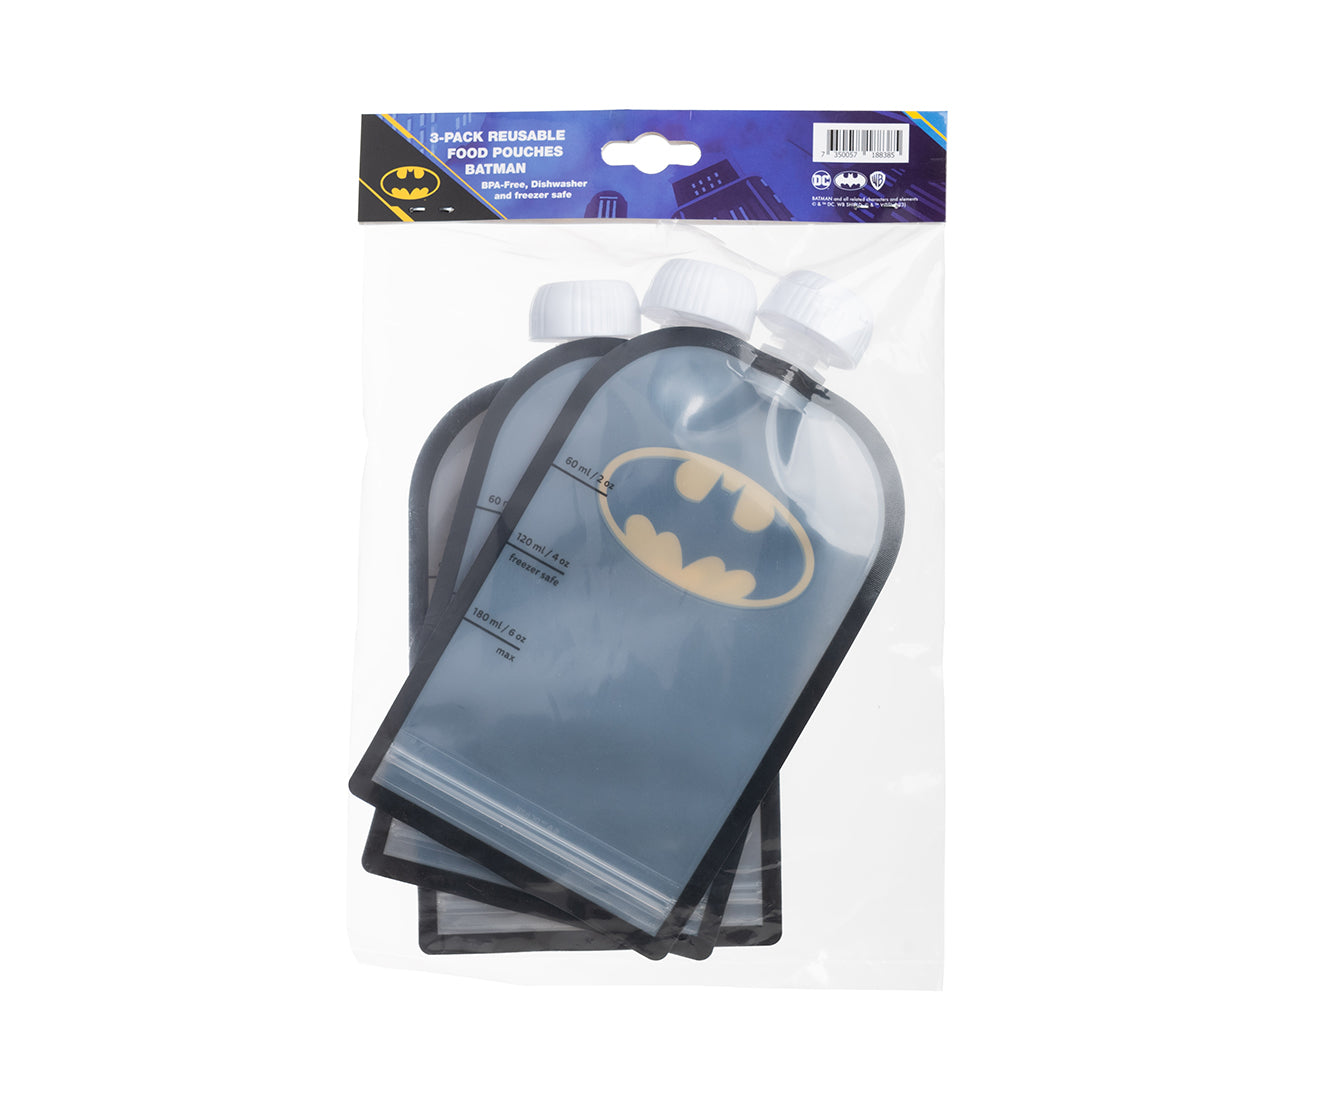 Klämmis, Batman, 180 ml, 3-pack